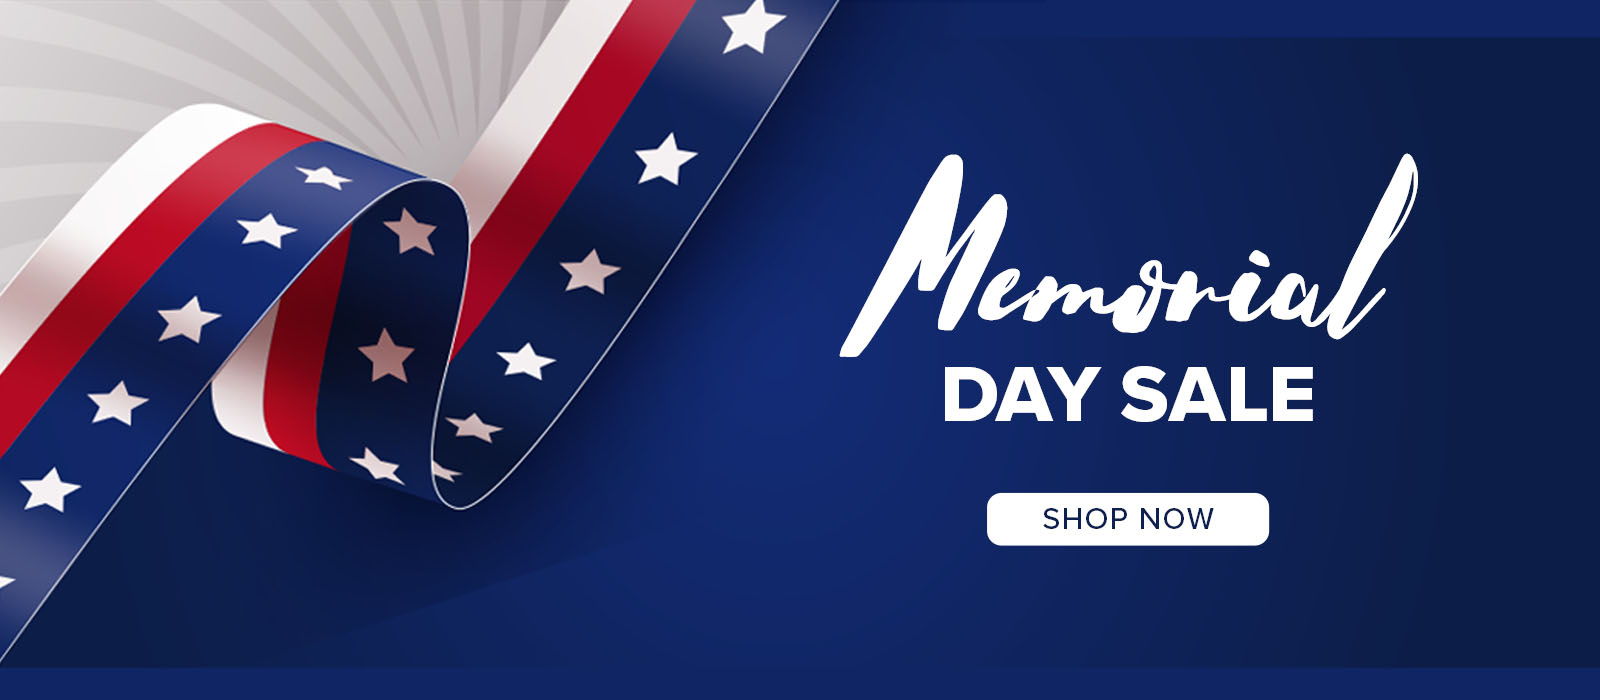 Memorial Day Sale - Shop Now